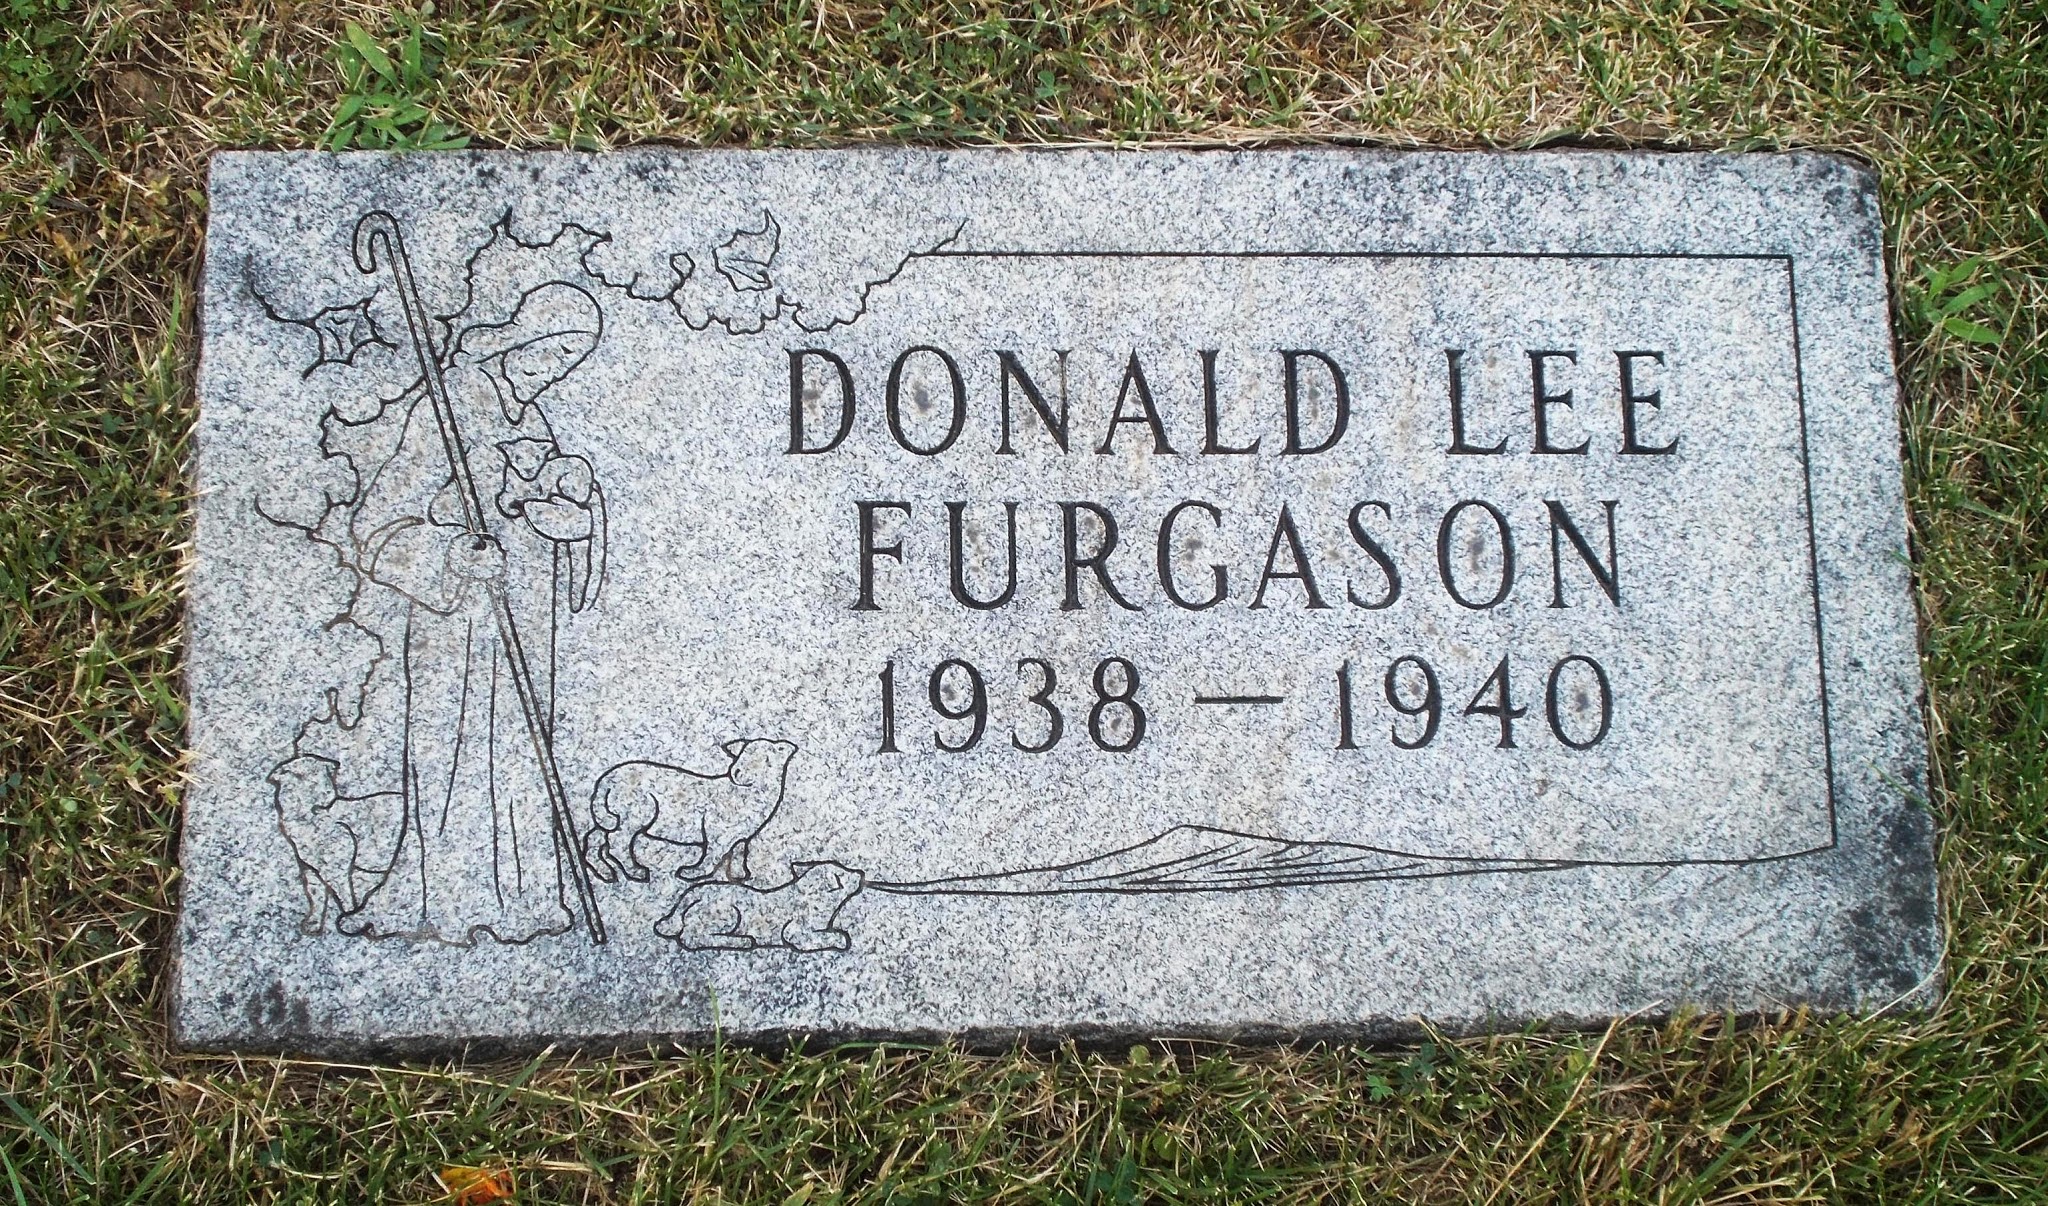 Donald Lee Furgason